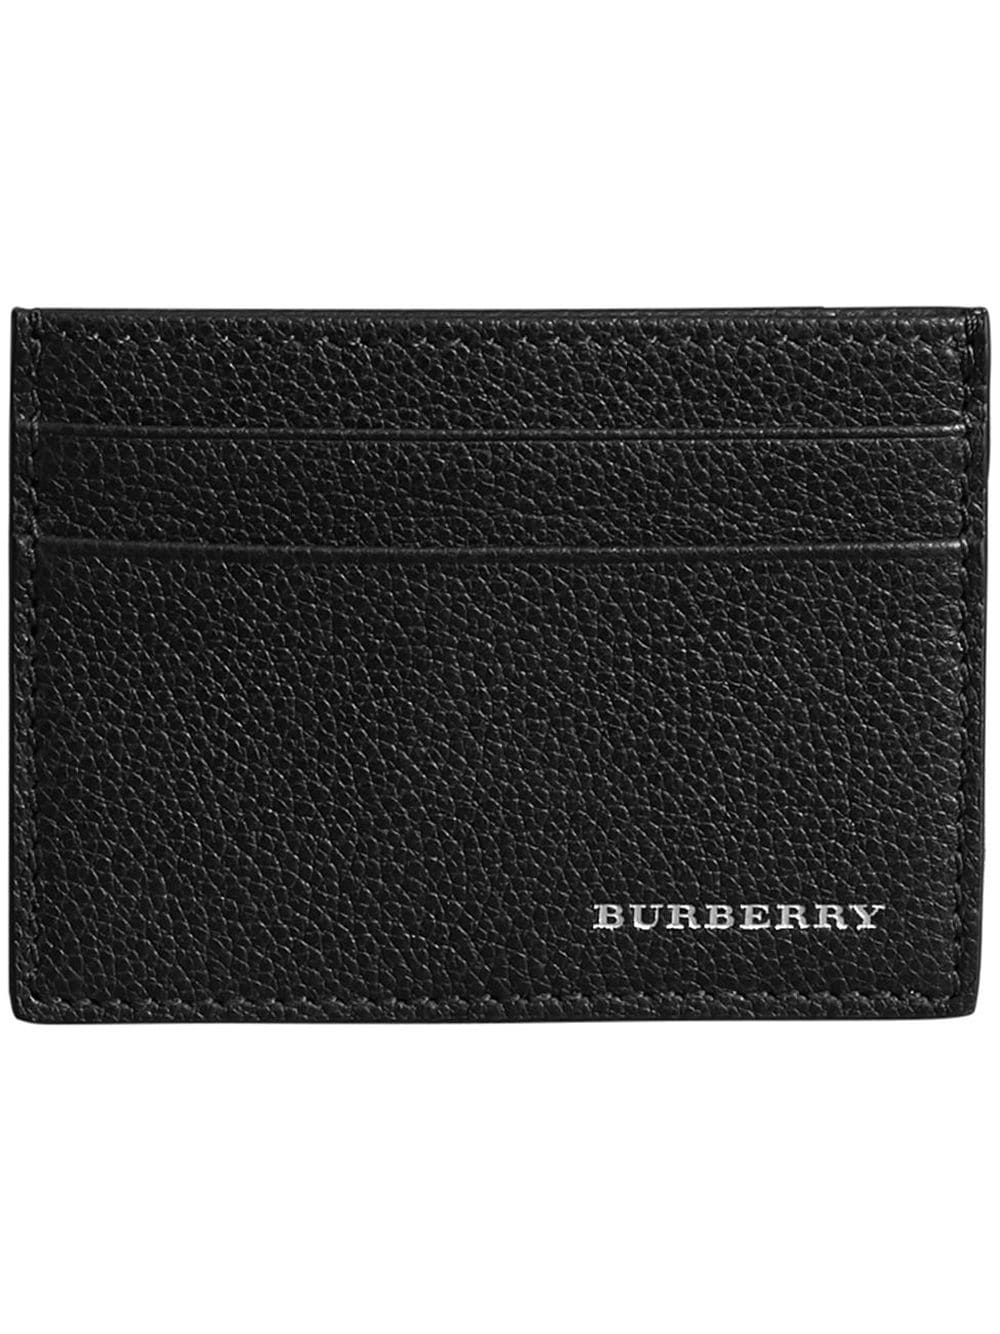 BURBERRY BURBERRY GRAINY LEATHER CARD CASE - BLACK,407397012963196